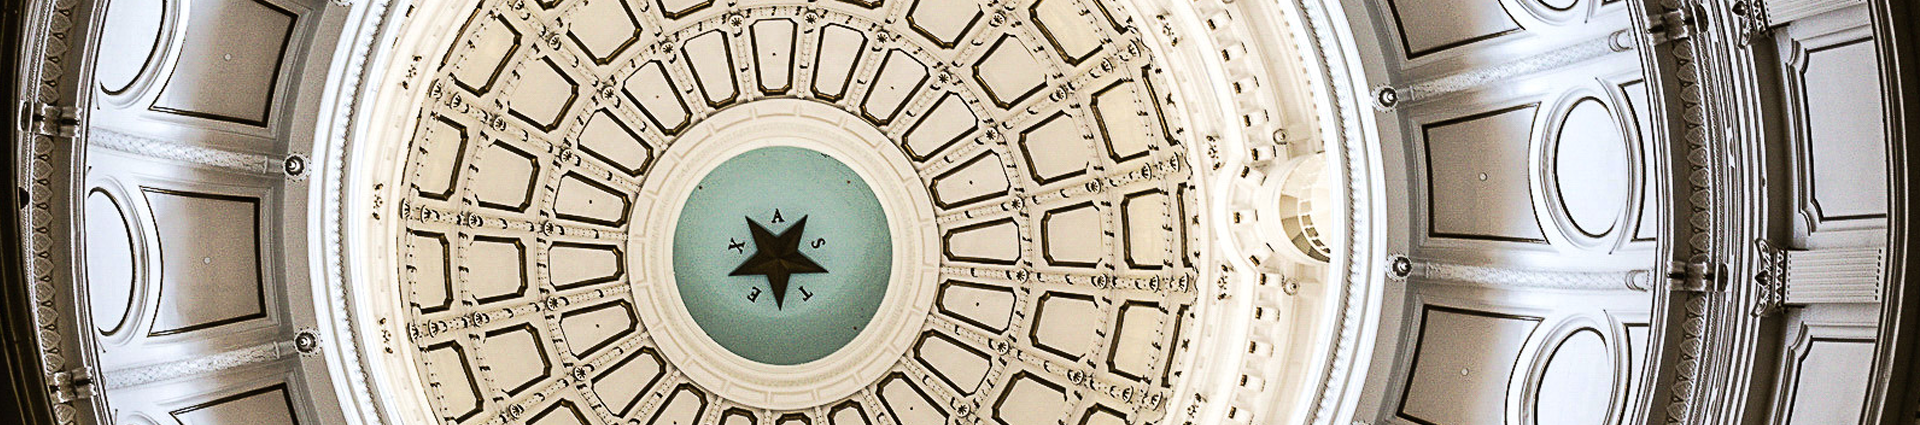 Texas Capital building dome